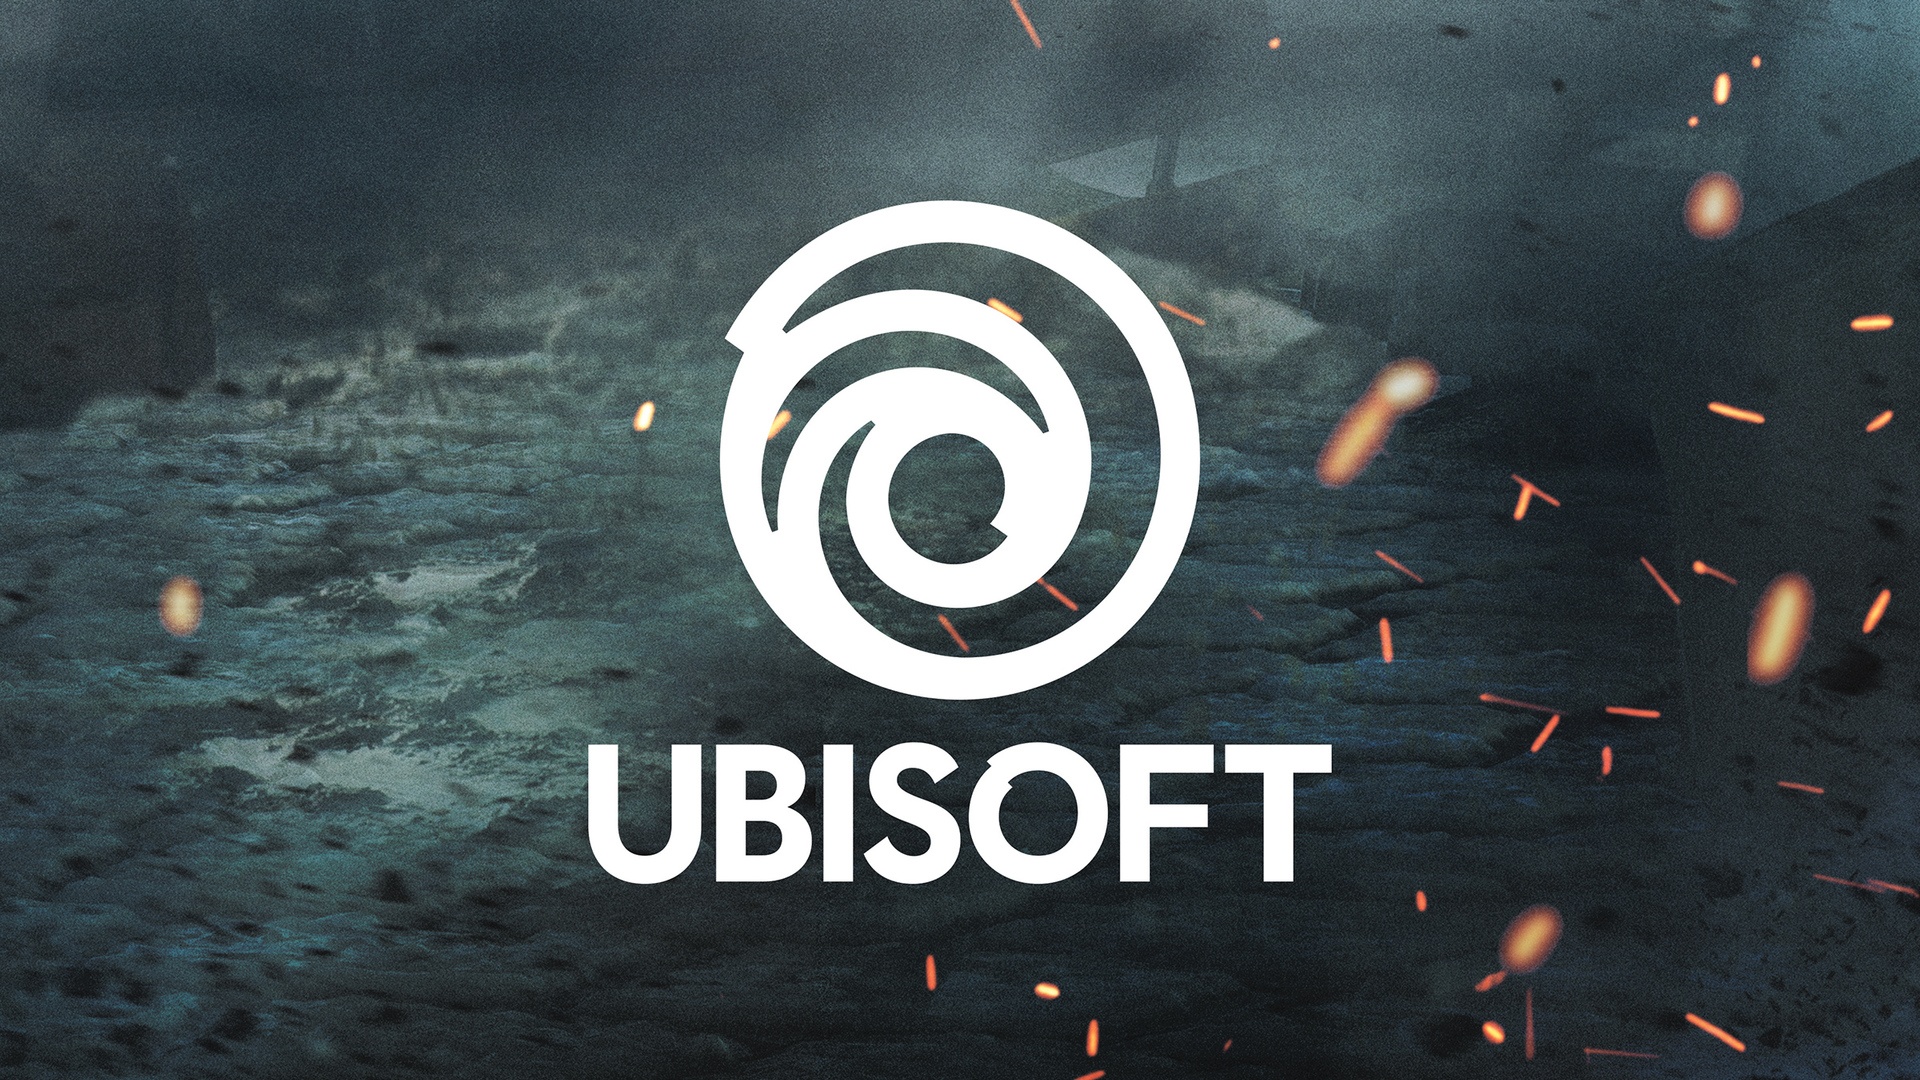 ubisoft new logo 2017 hg 1920x1080 1-oyunpat